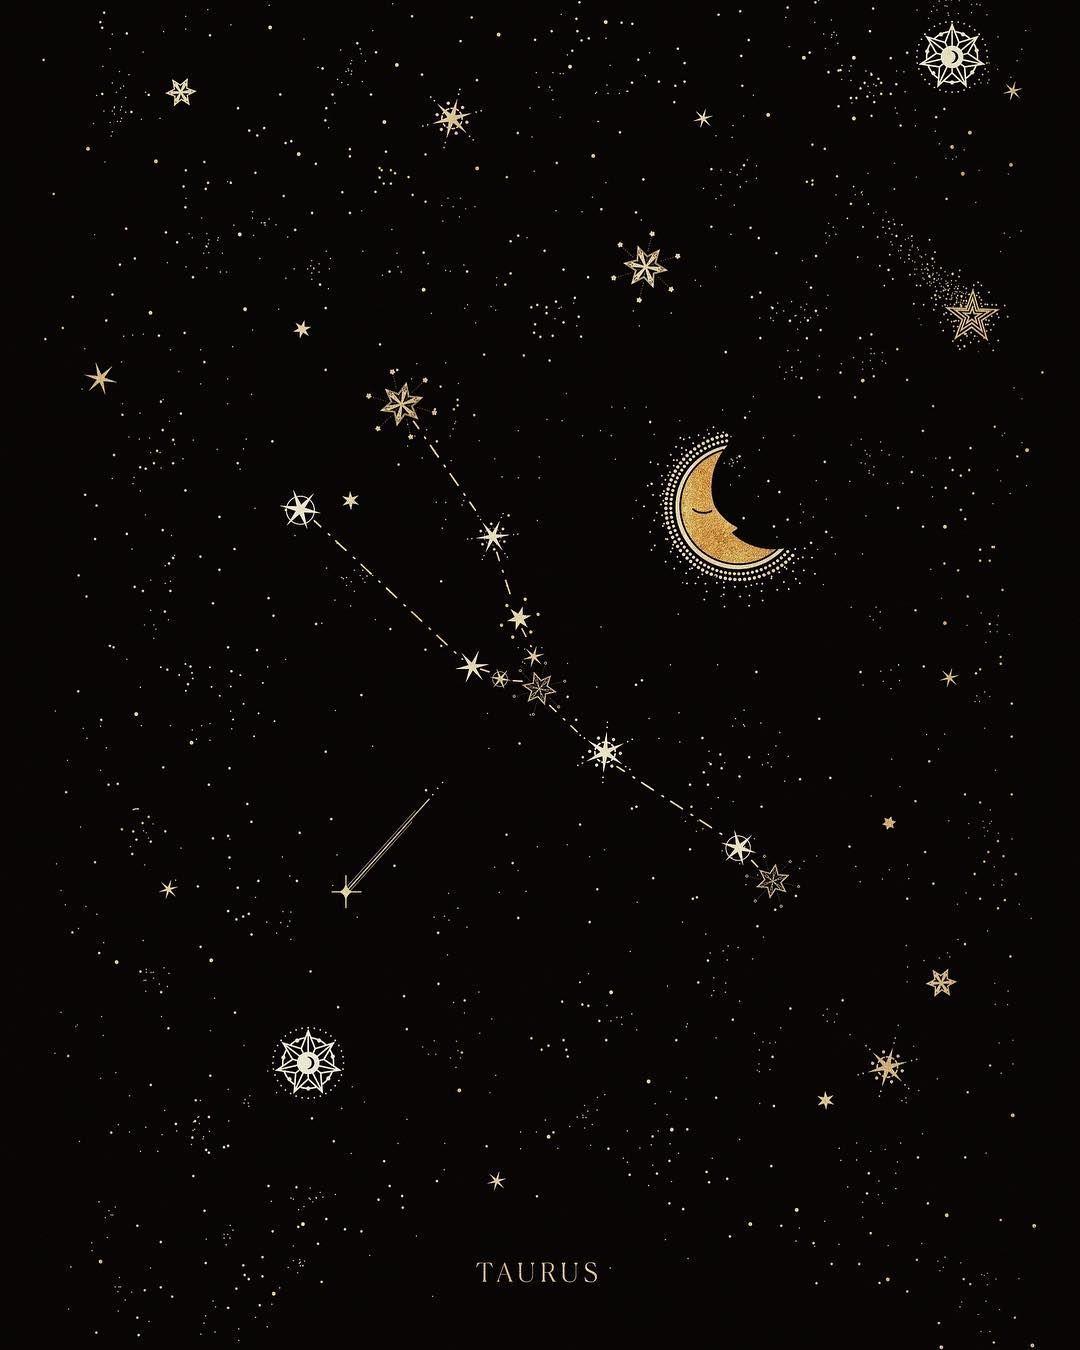 Taurus Constellation Wallpapers - Top Free Taurus Constellation ...